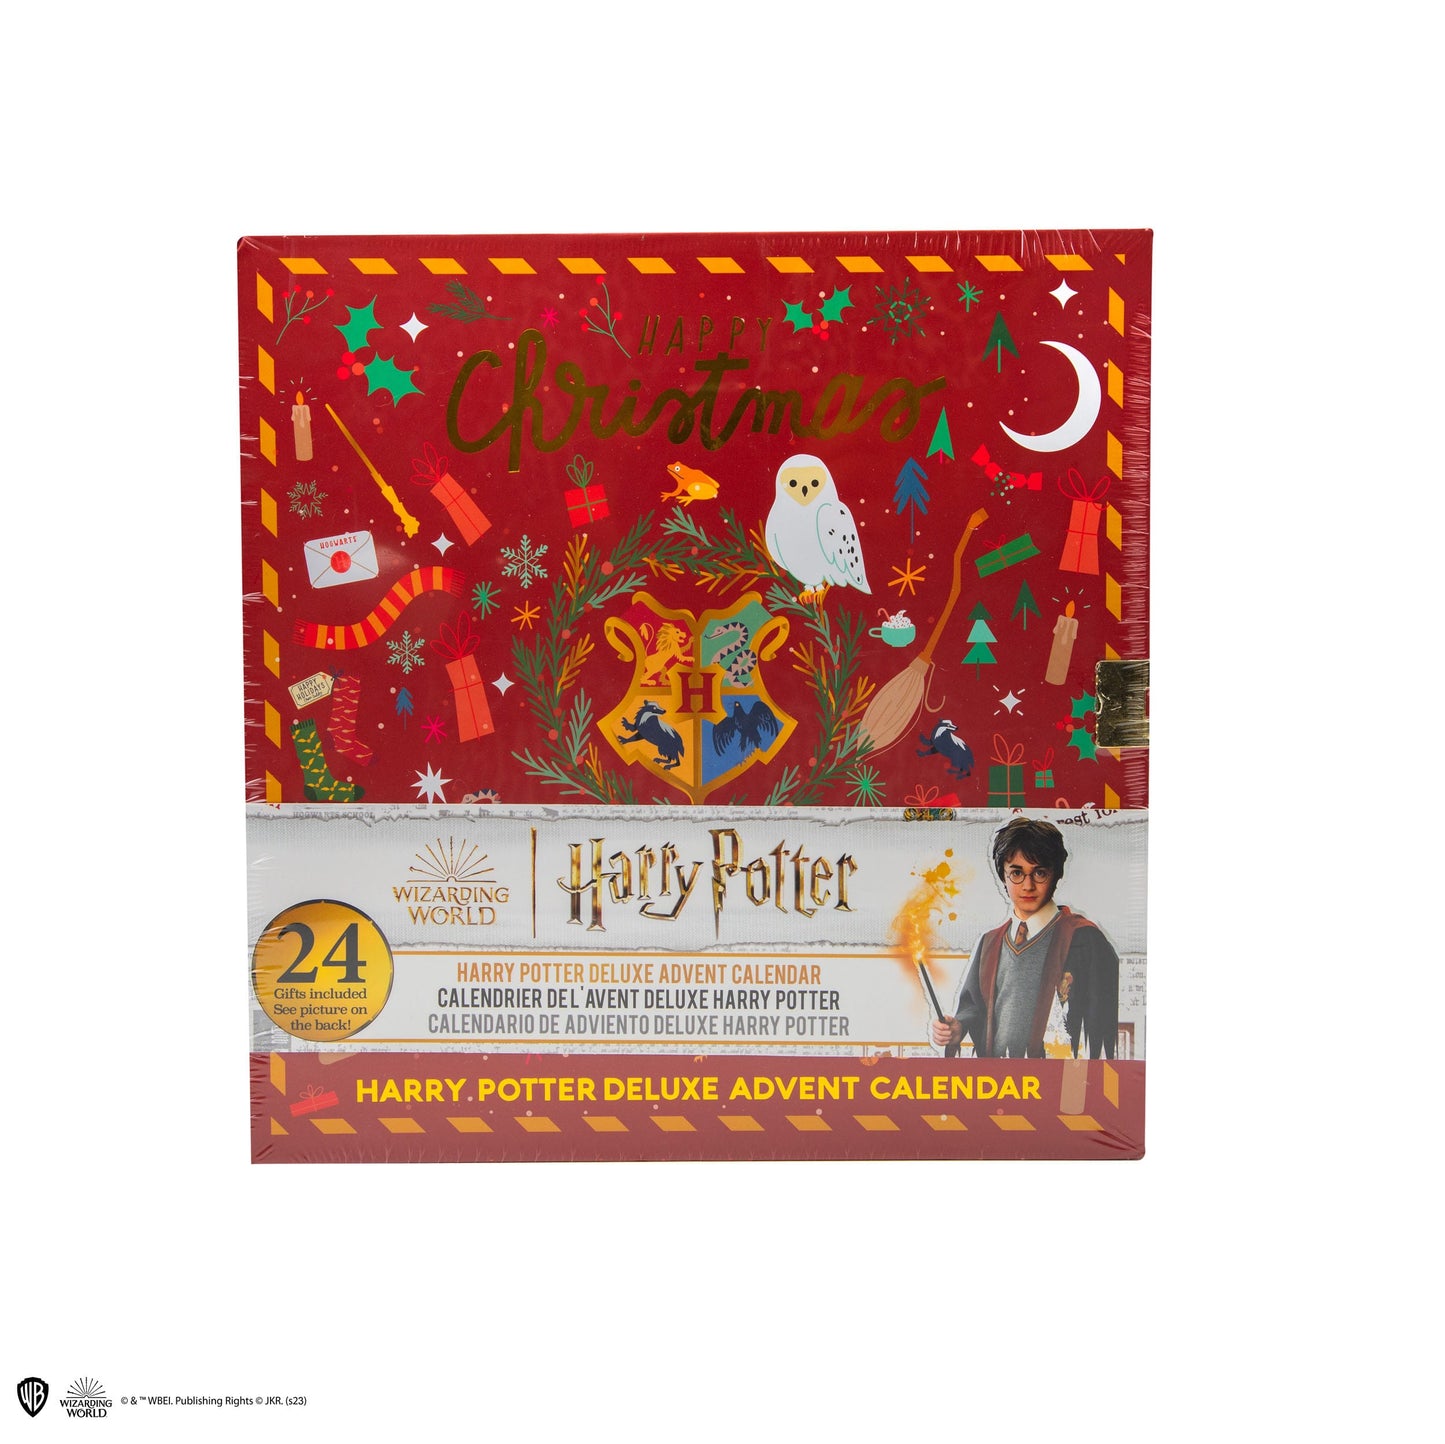 Calendário do Advento Harry Potter - Deluxe